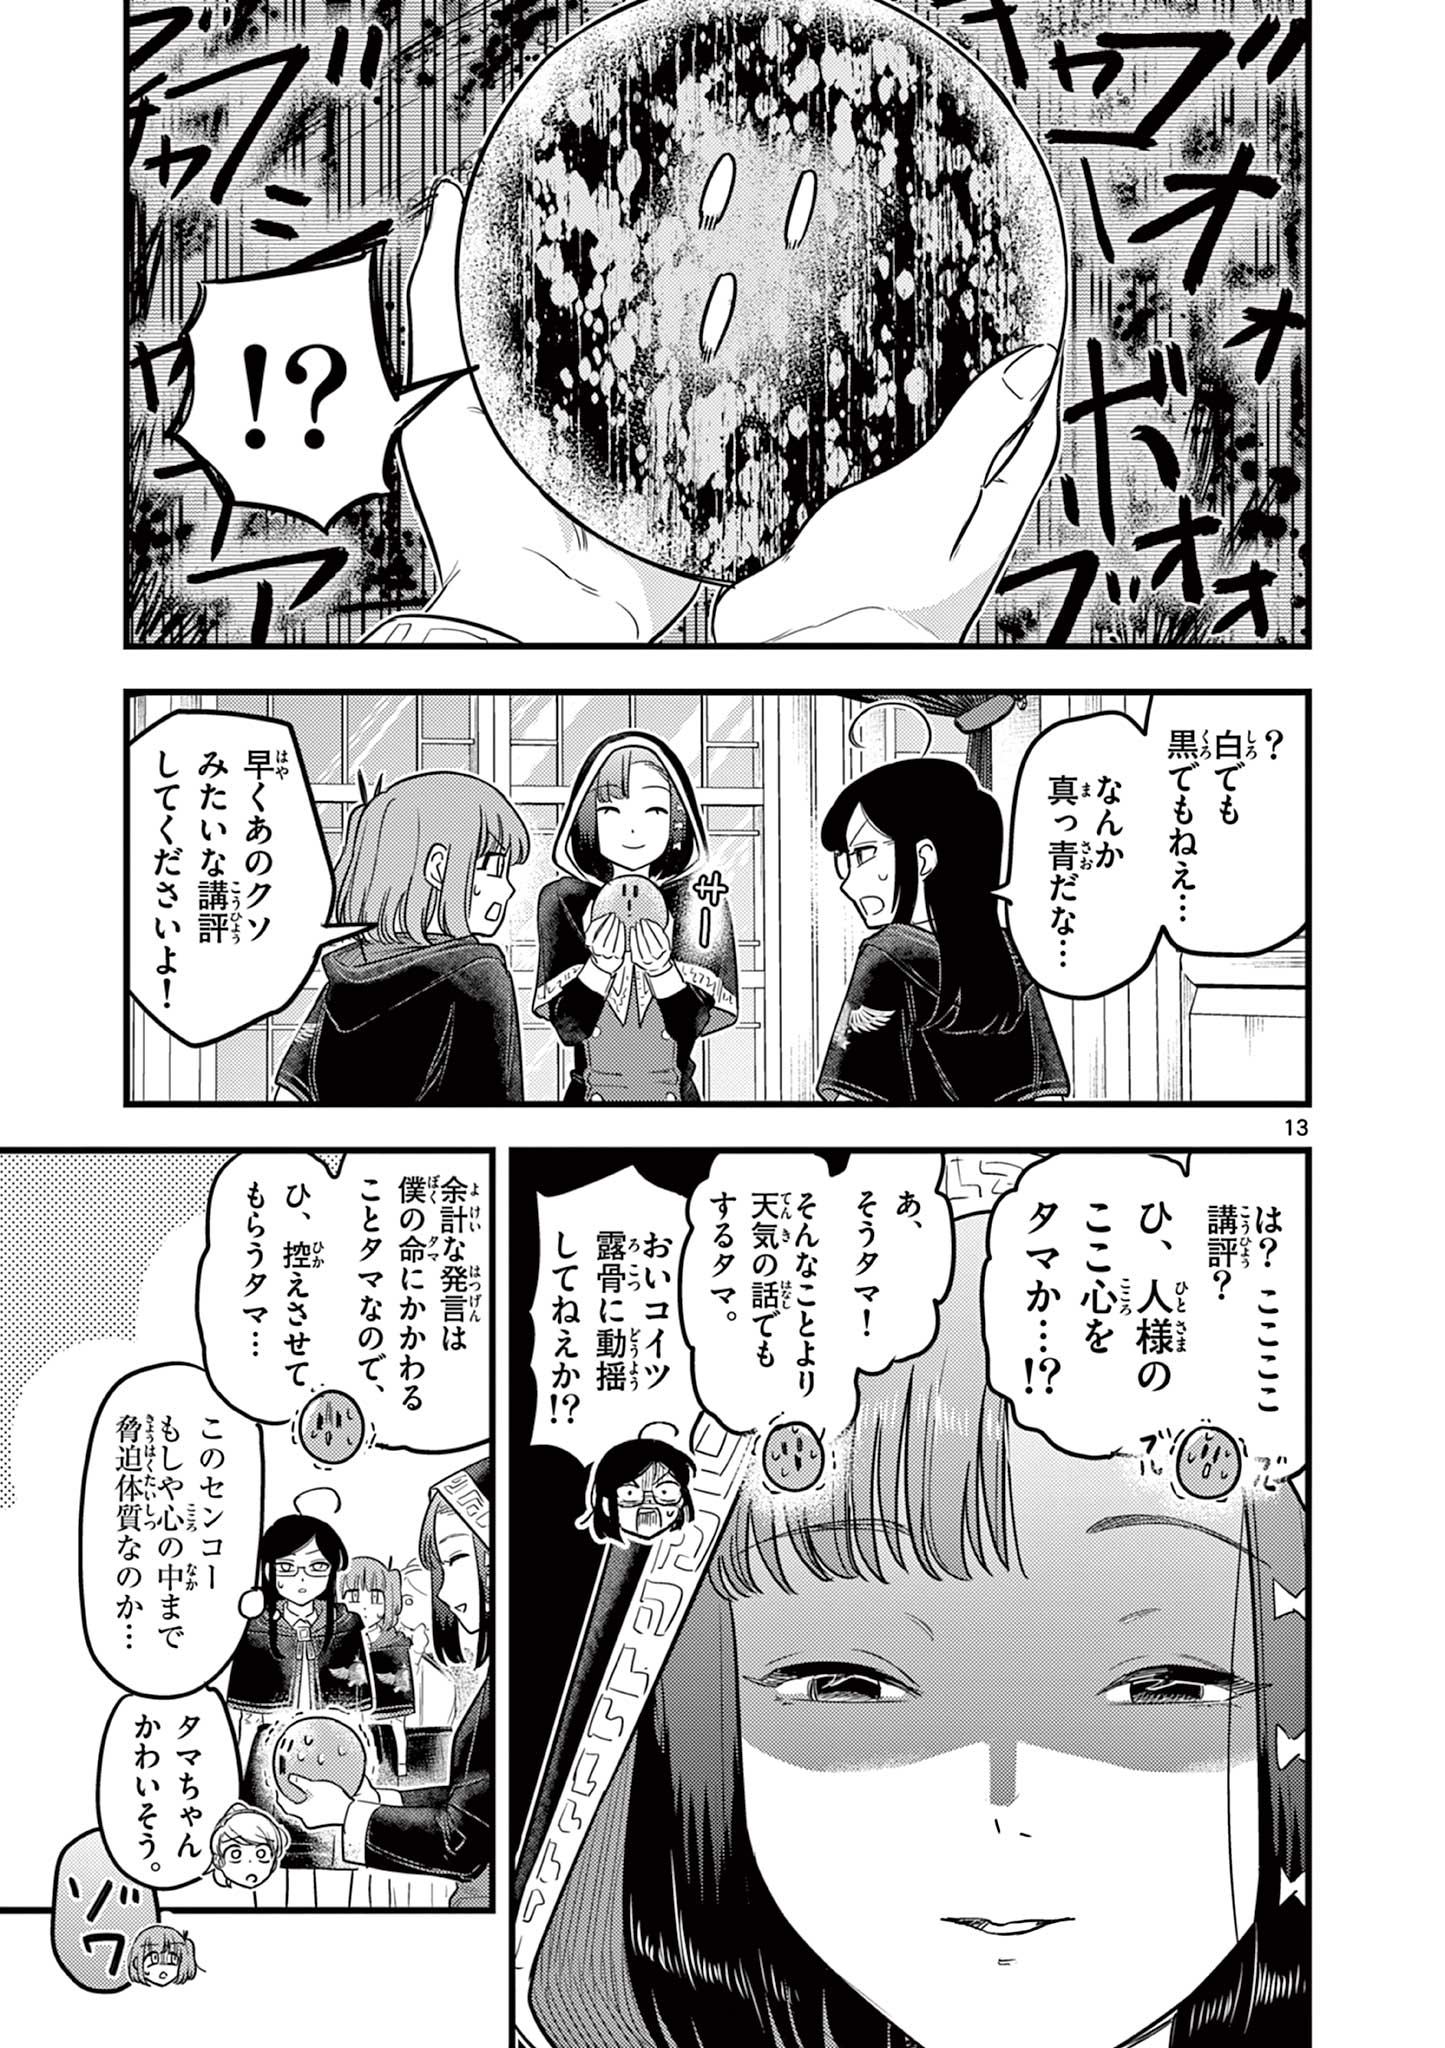 Kuro Mahou Ryou no Sanakunin - Chapter 10 - Page 13